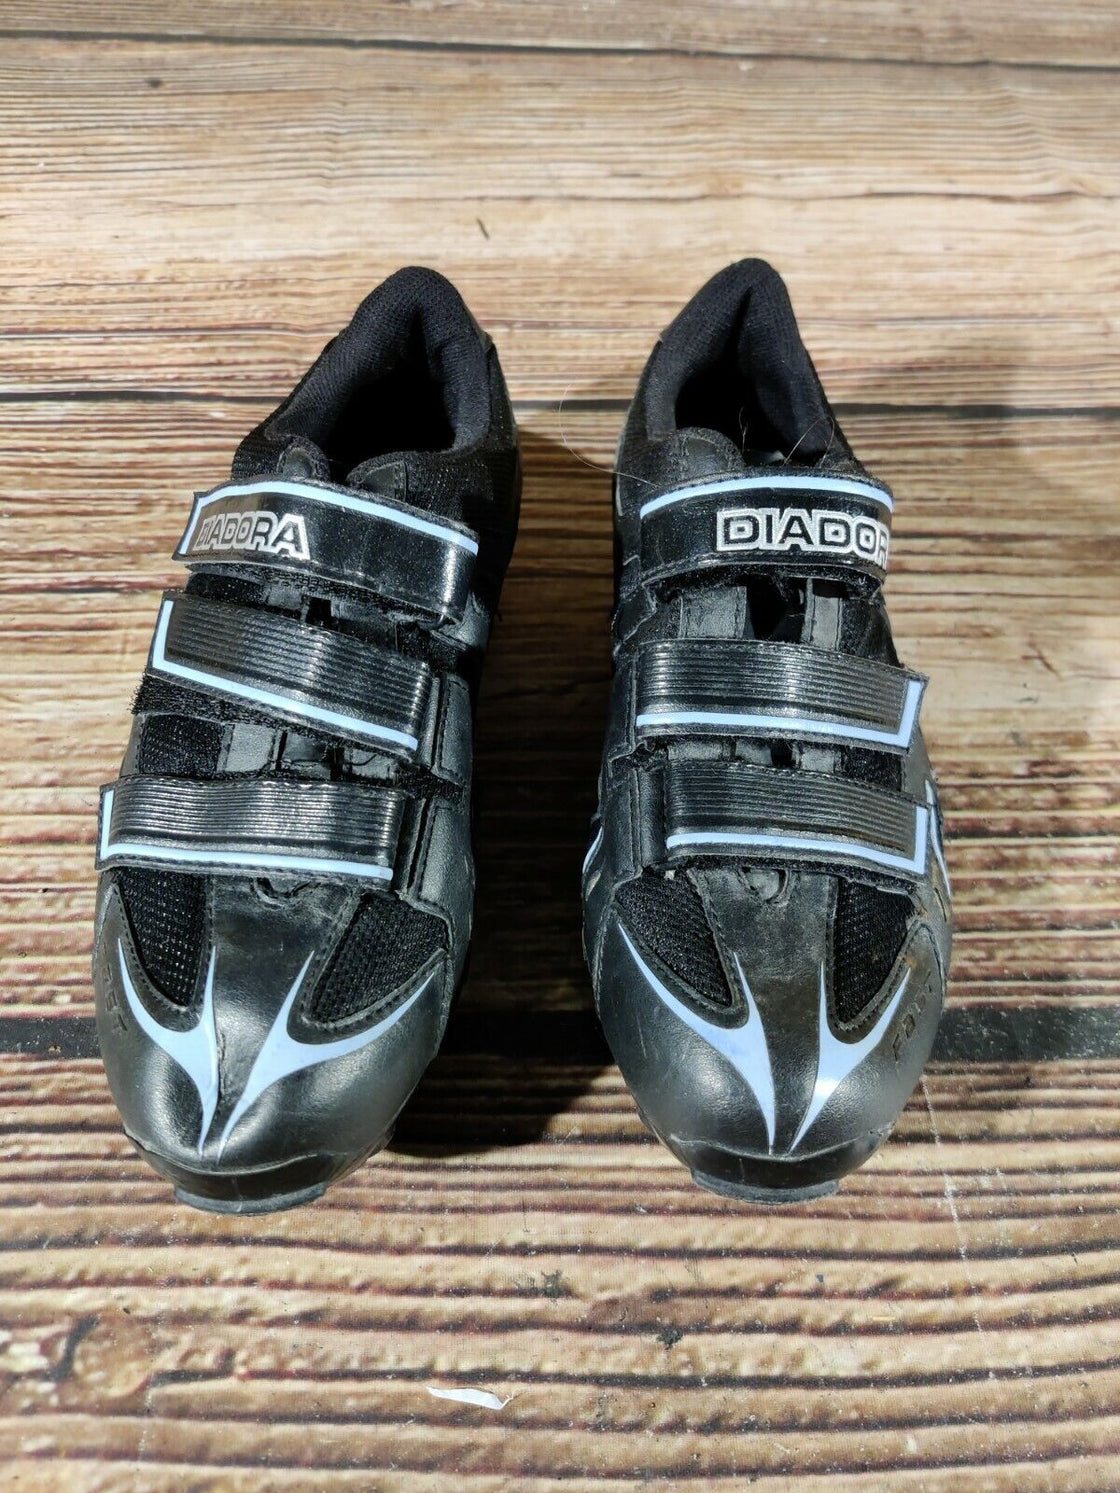 DIADORA Cycling MTB Shoes Mountain Bike Boots 2 Bolts Ladies EU38 US7